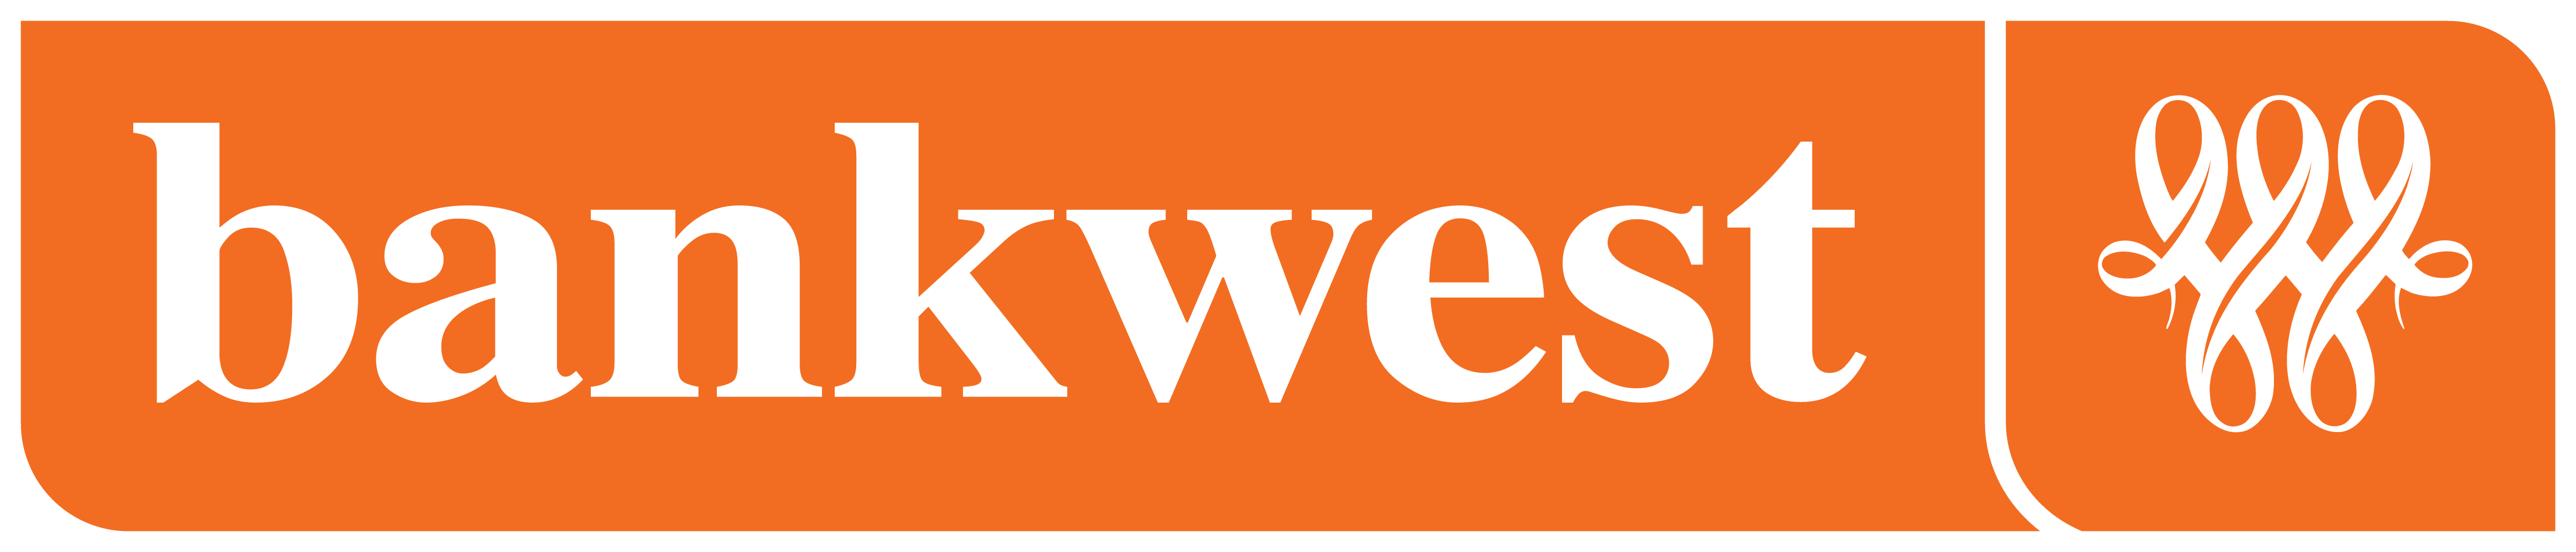 Bank West logo